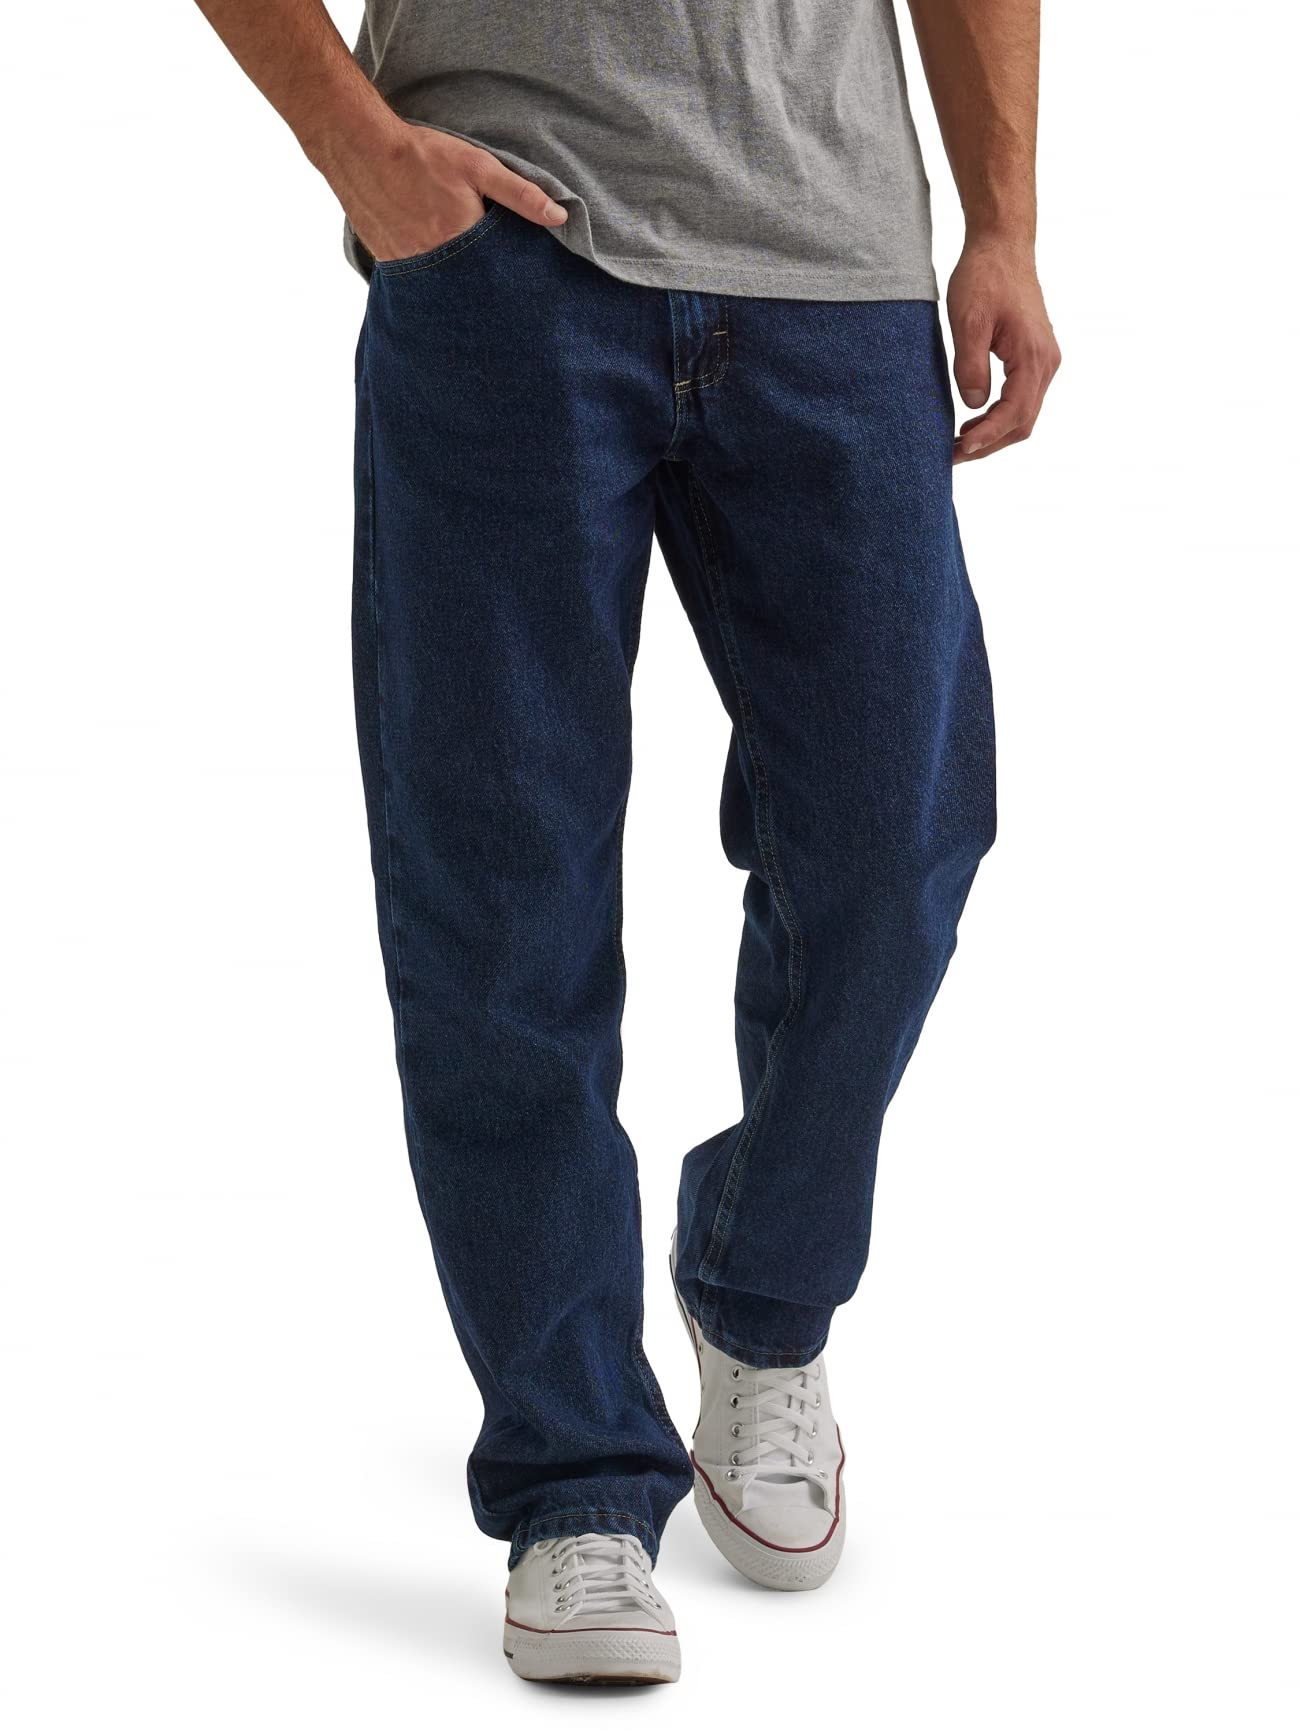 Wrangler Authentics Men's Big & Tall Classic 5-Pocket Relaxed Fit Cotton Jean, Dark Rinse, 46W X 30L